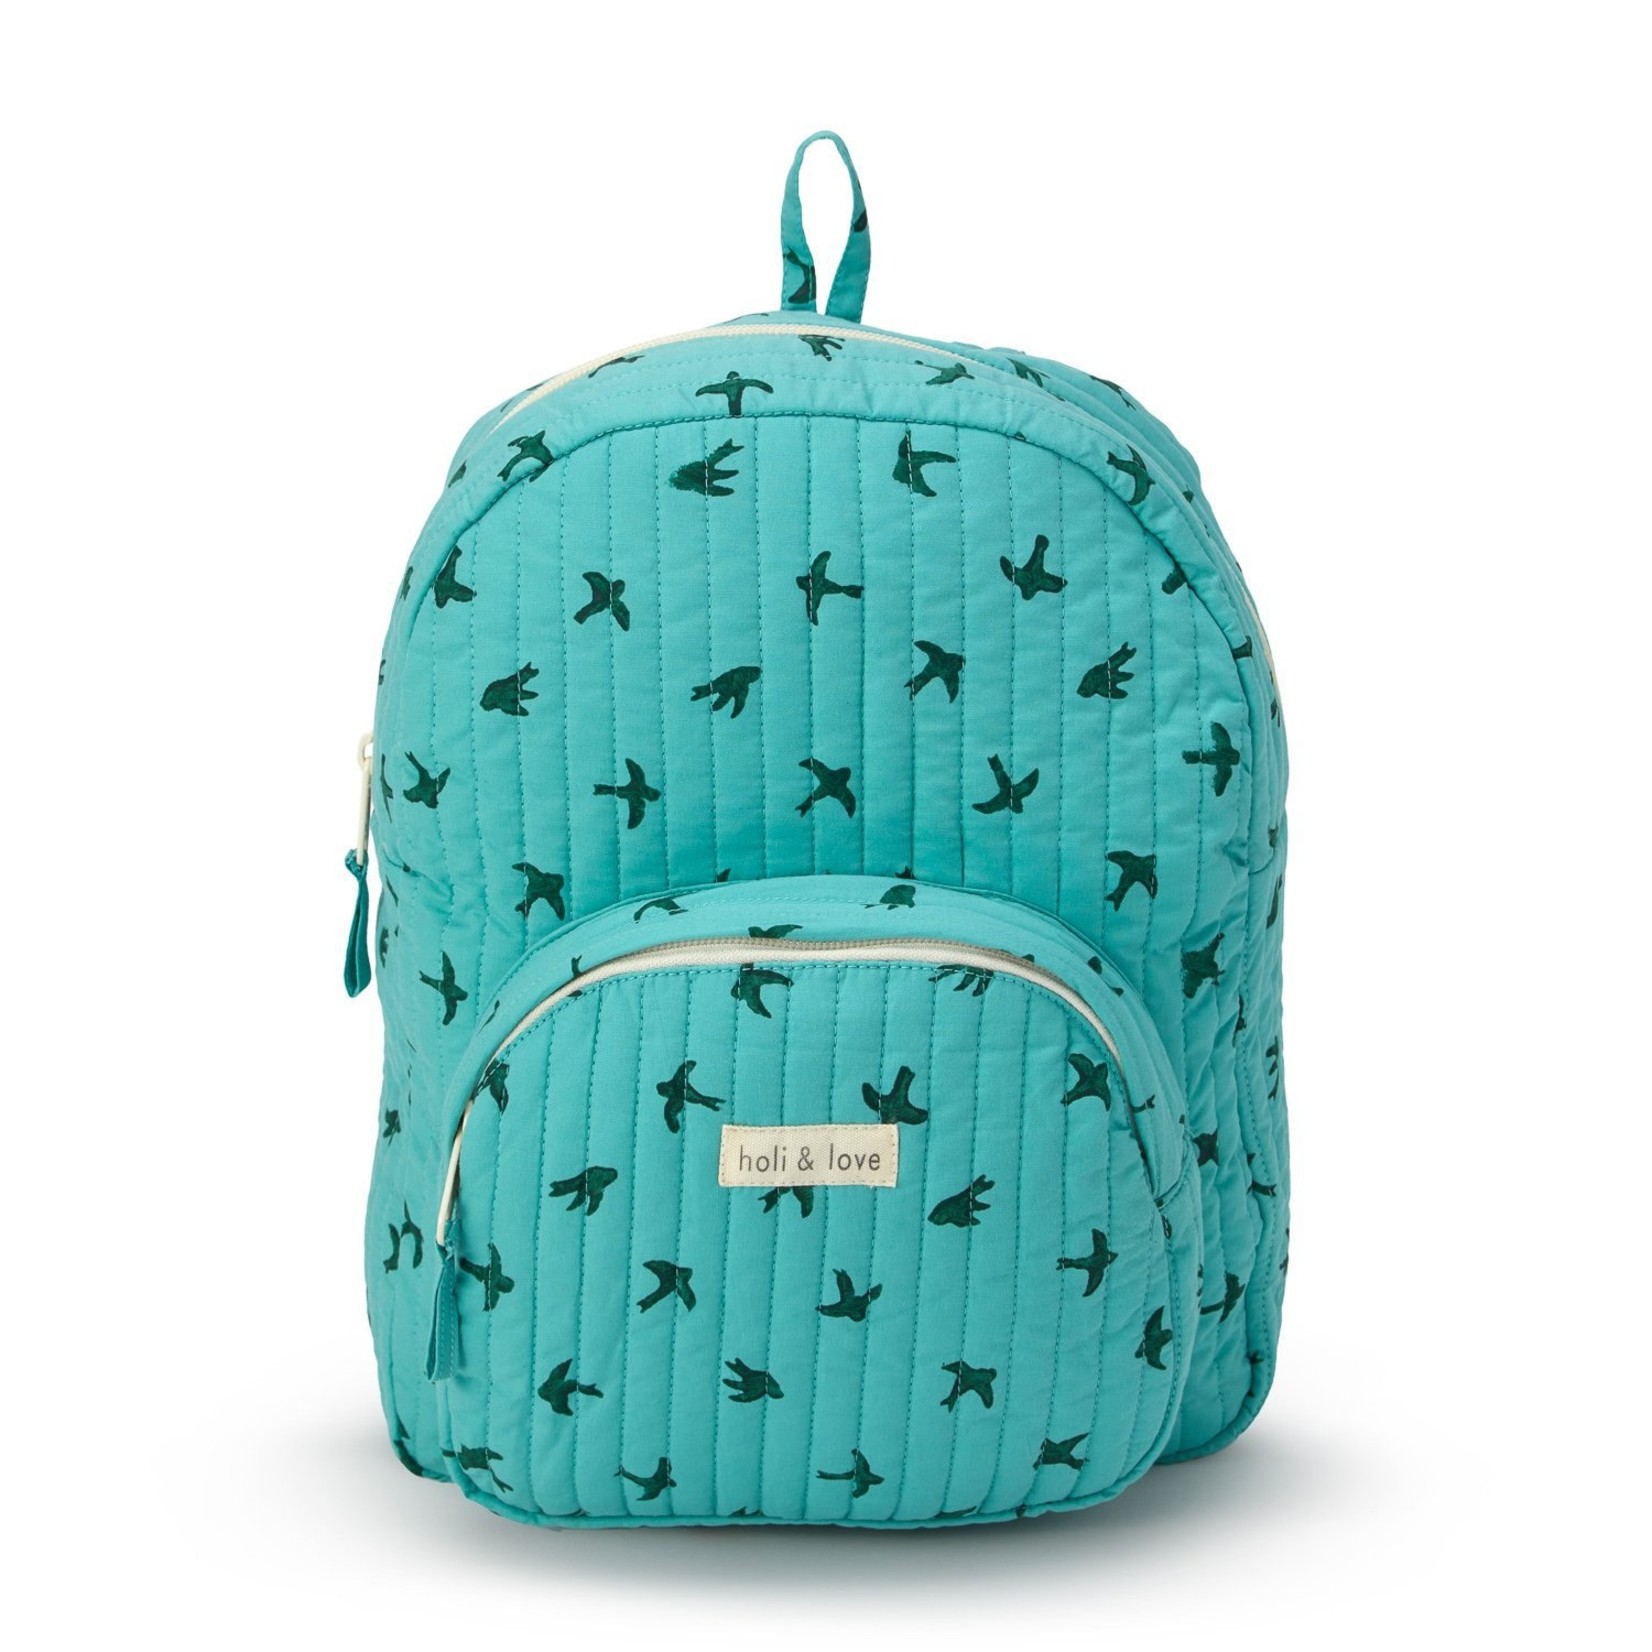 Holi and Love Children's backpack - Green bird